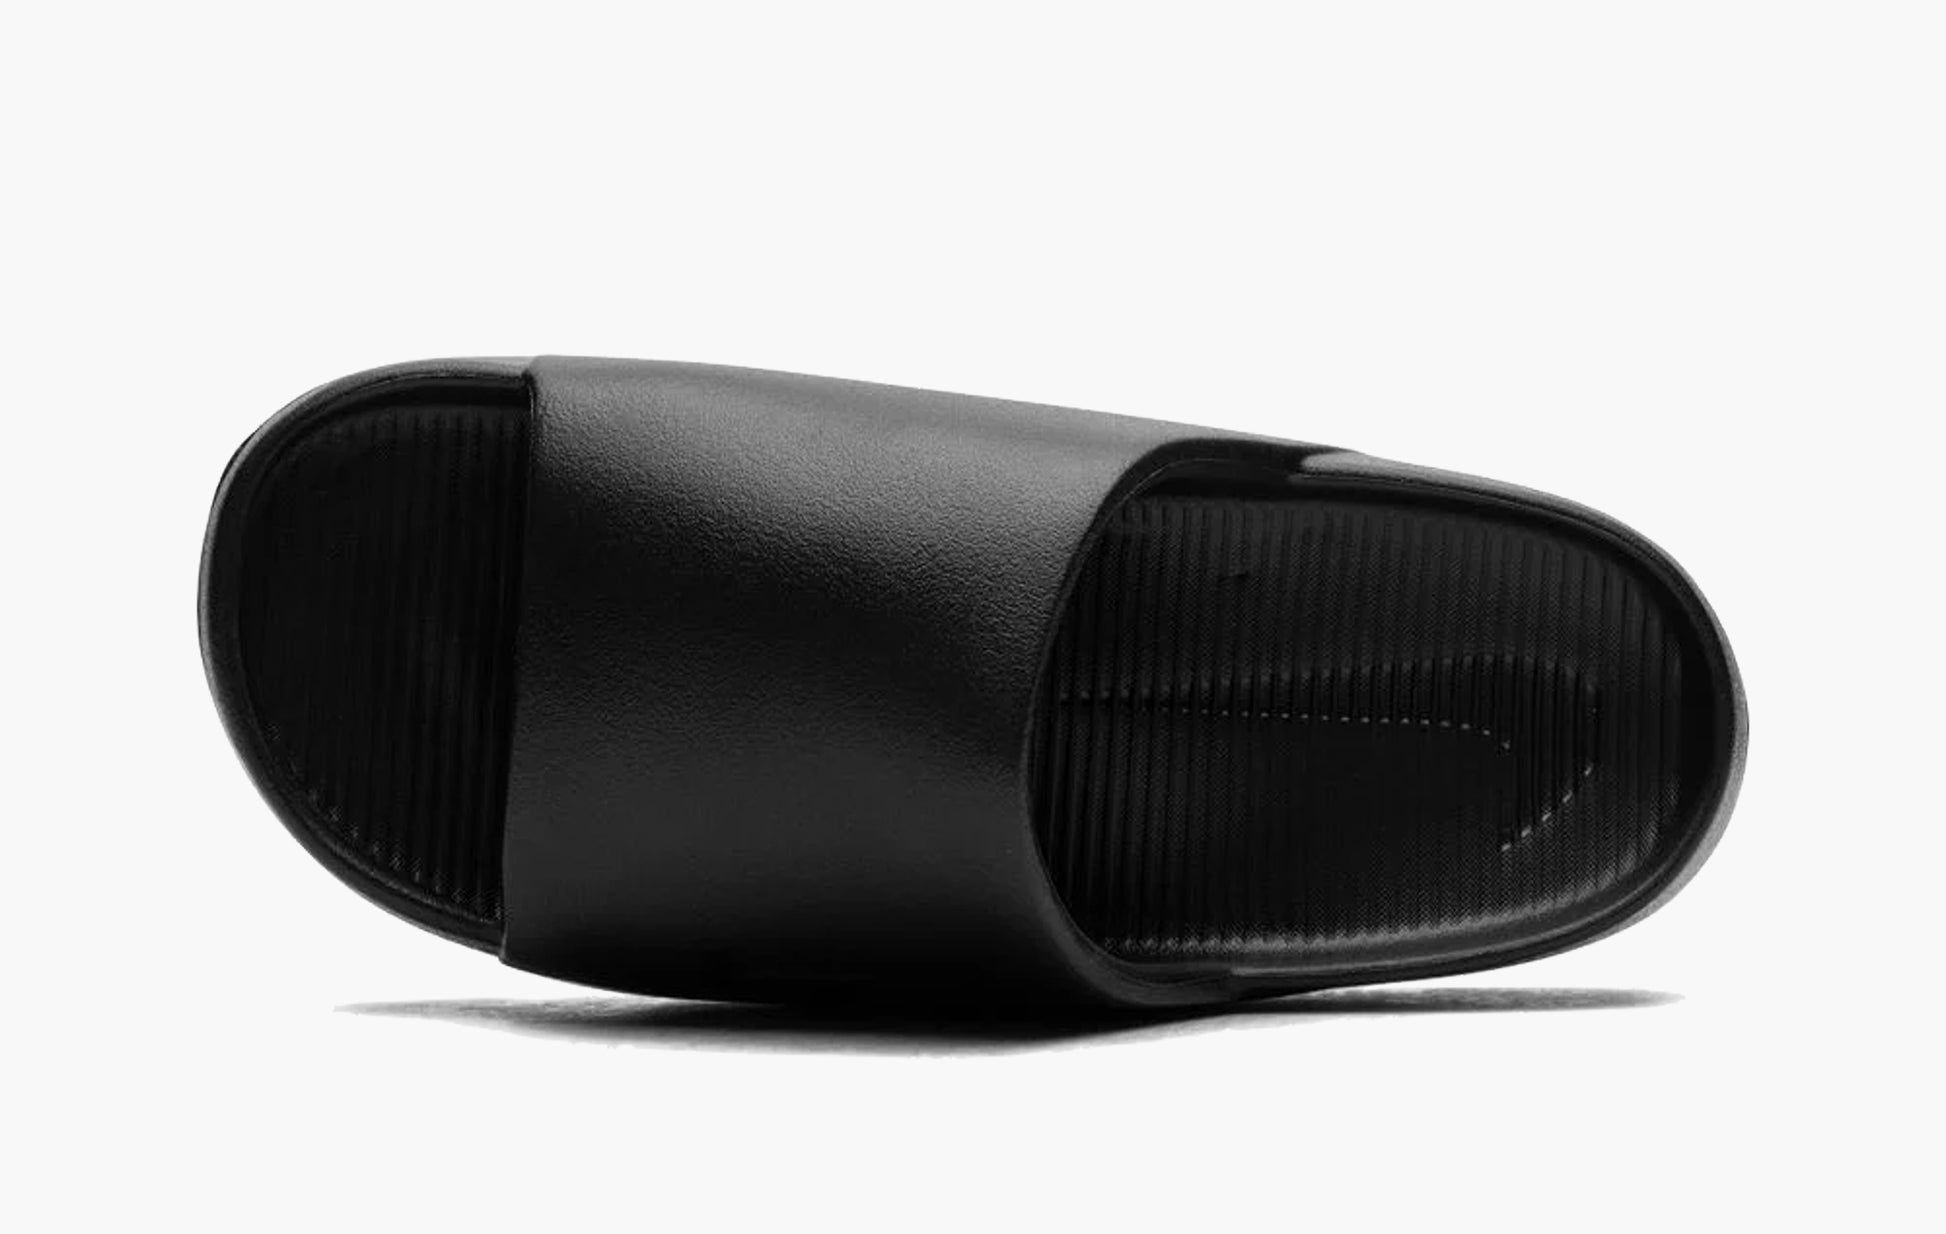 Nike Calm Slide Black - FD4116 001 | The Sortage